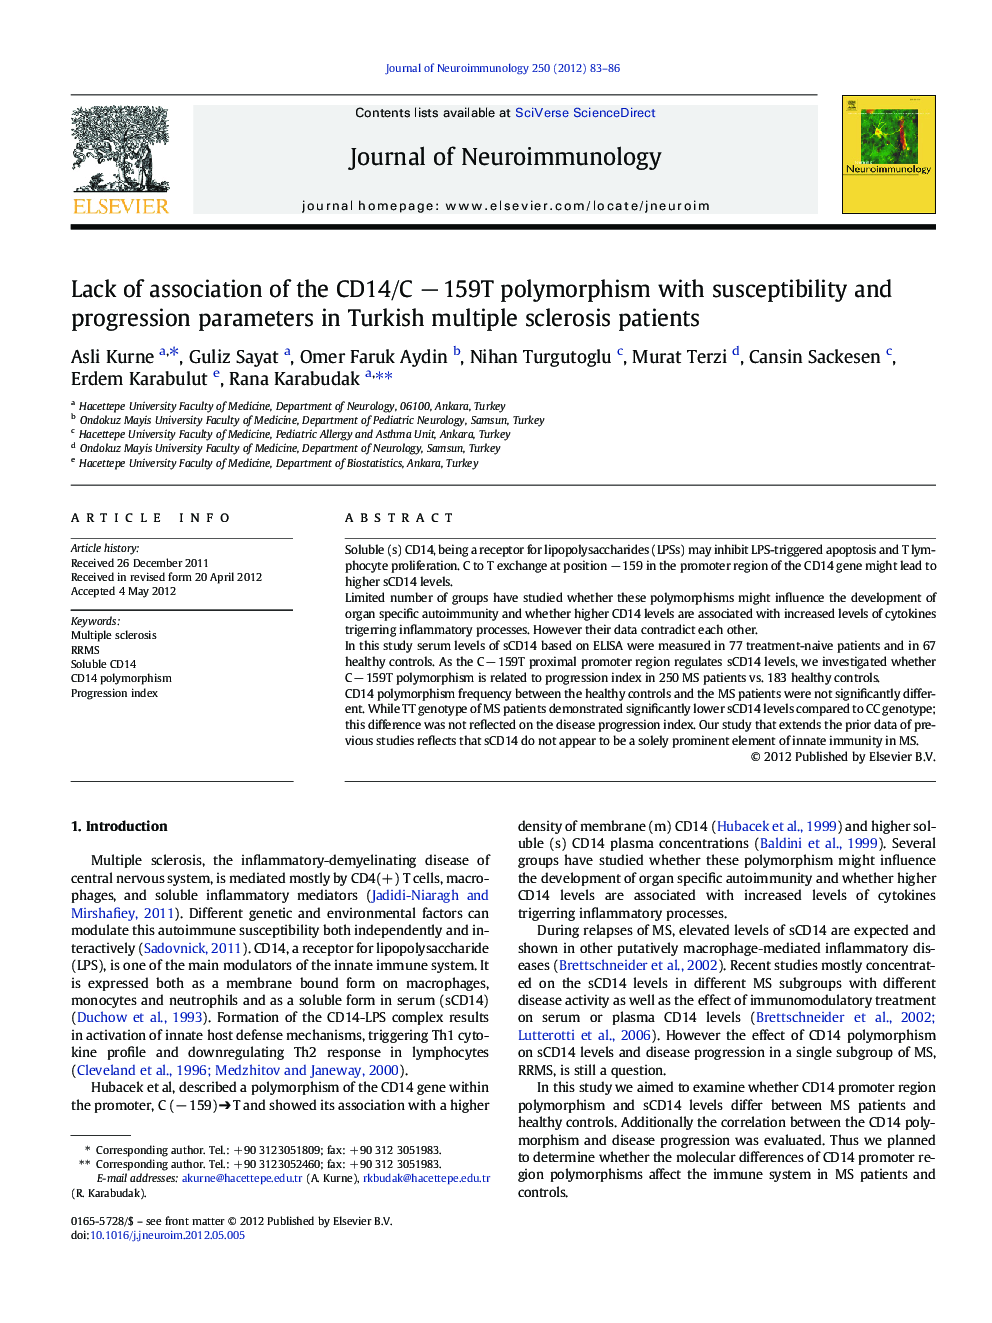 Lack of association of the CD14/C âÂ 159T polymorphism with susceptibility and progression parameters in Turkish multiple sclerosis patients